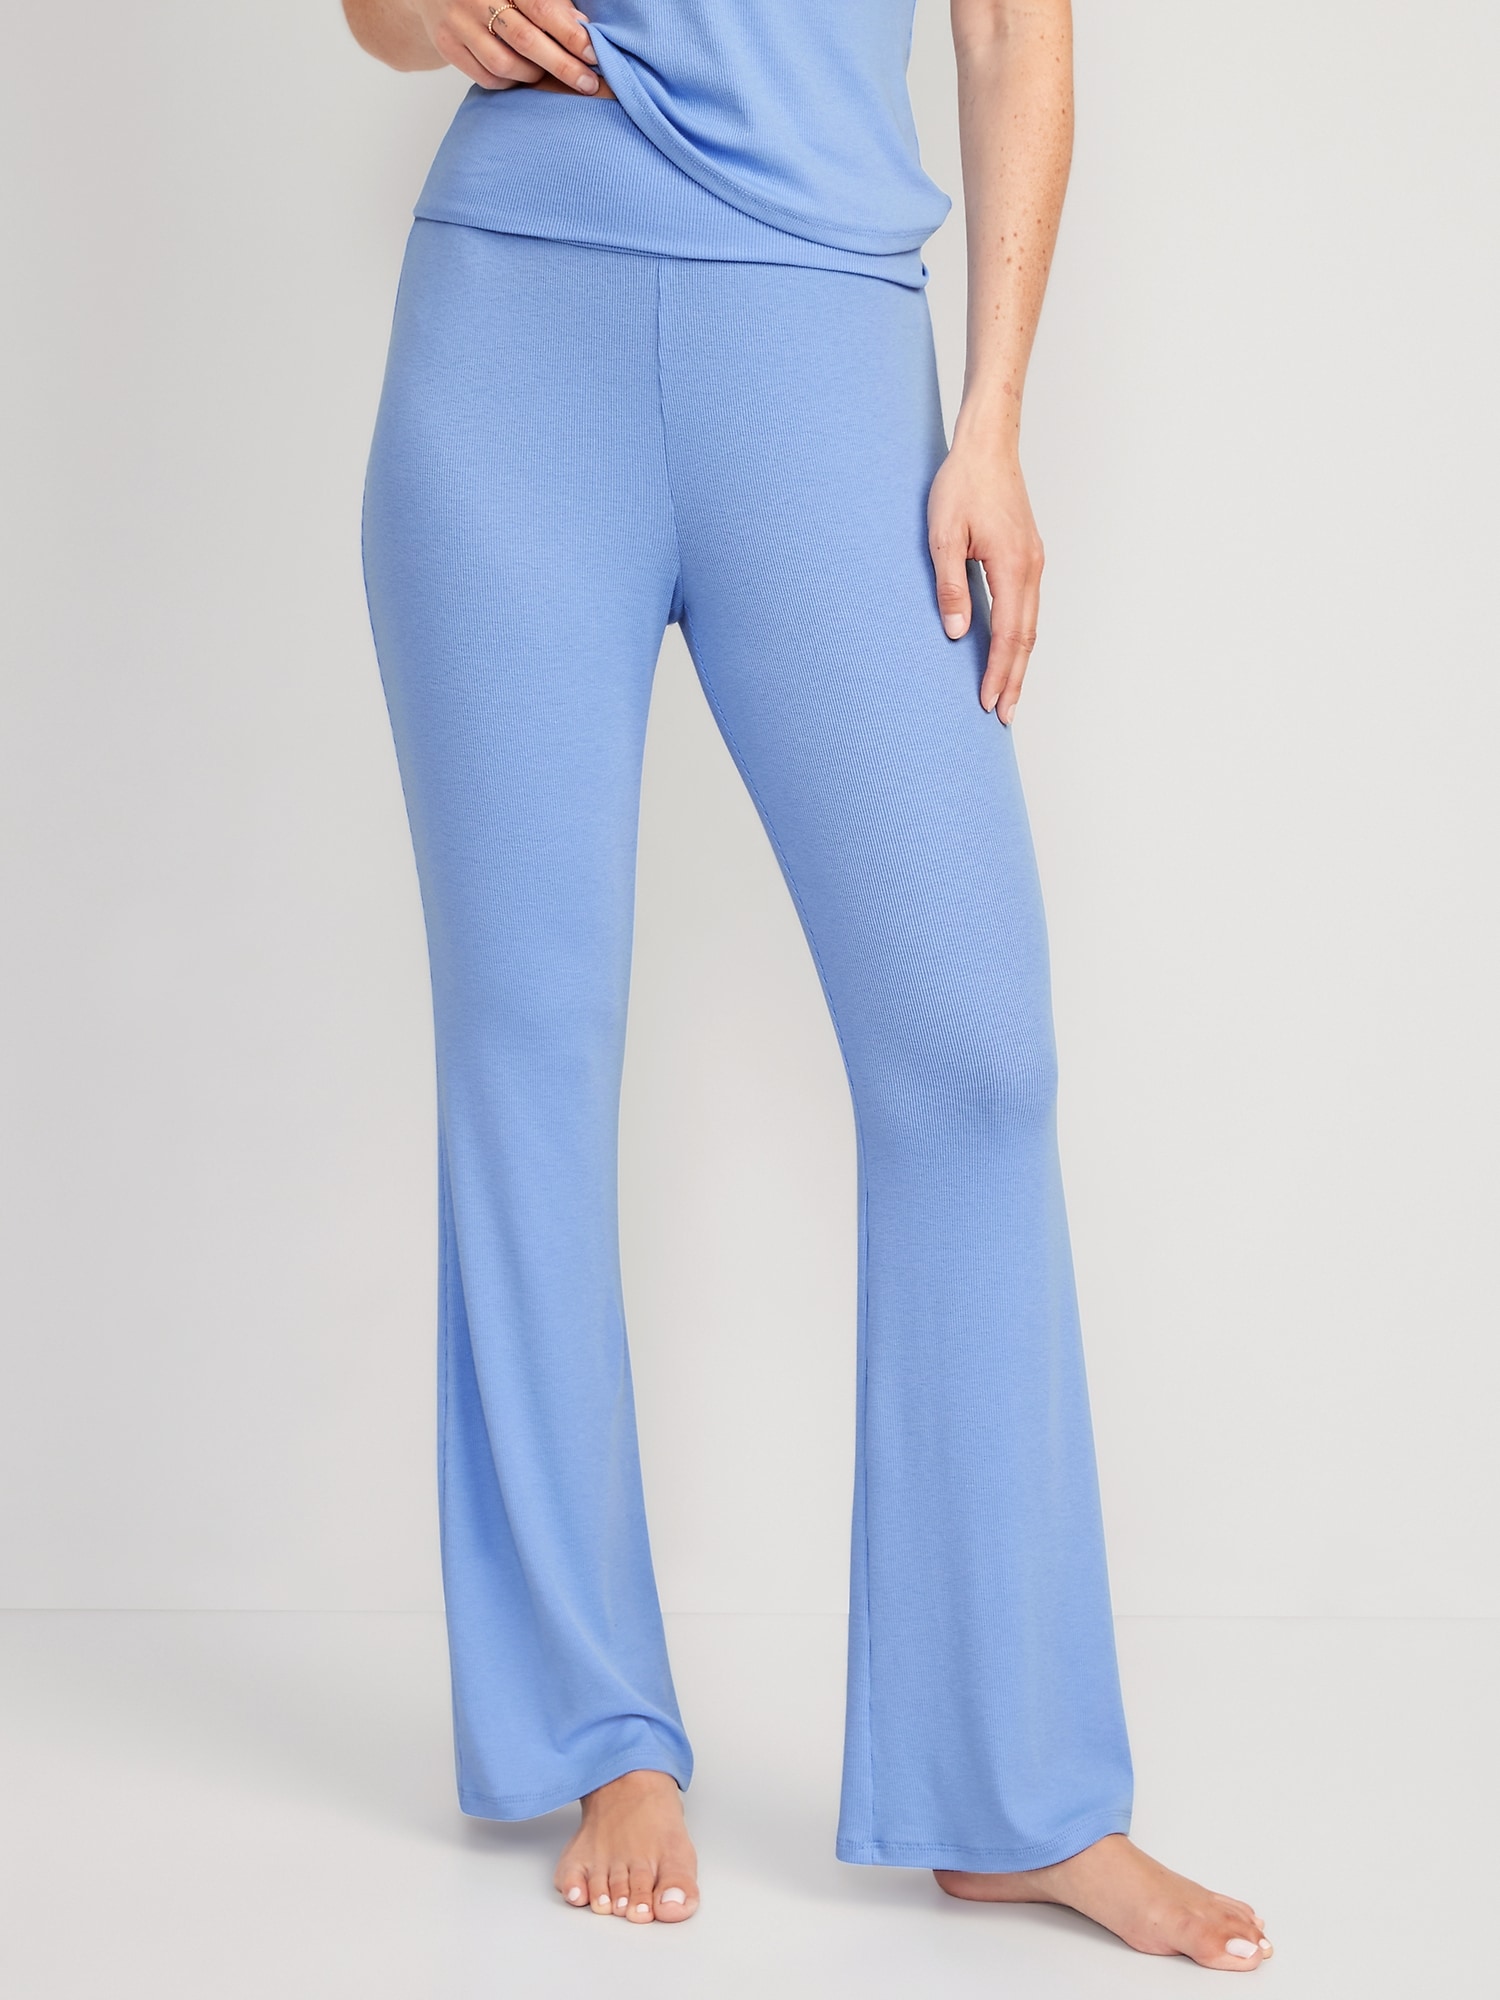 Old Navy Mid-Rise UltraLite Foldover-Waist Flare Lounge Pants for Women blue. 1